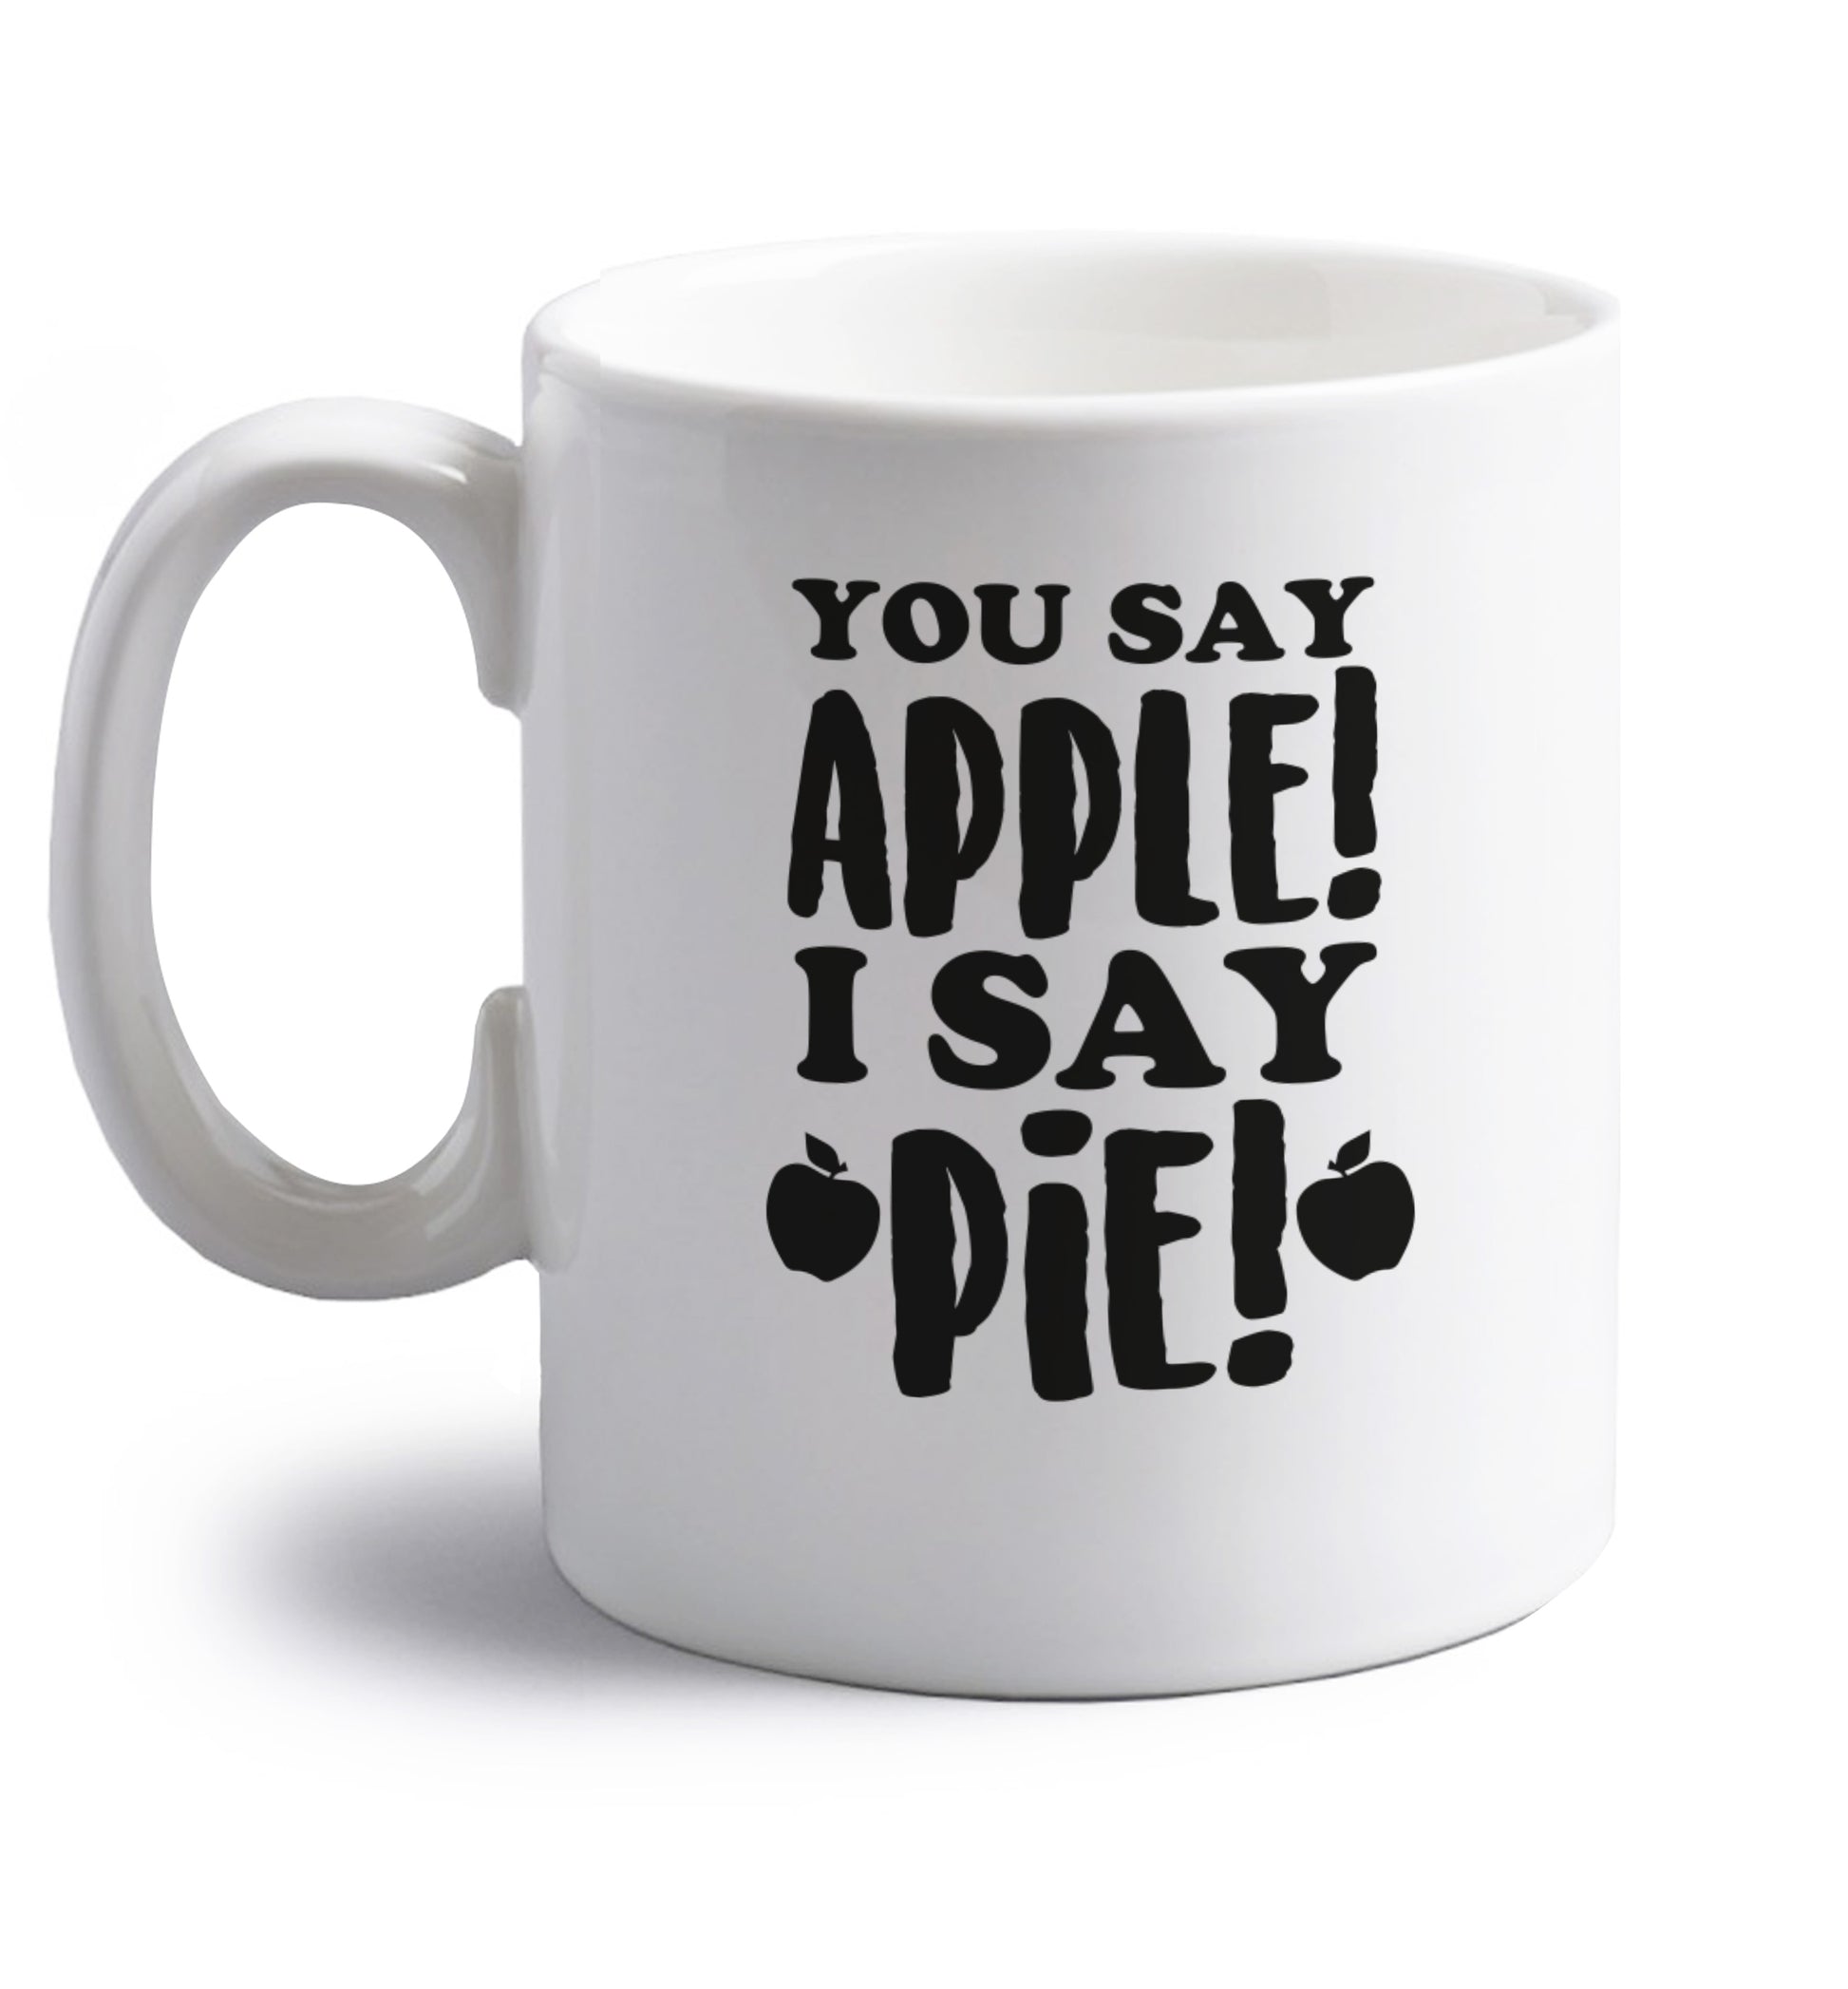 You say apple I say pie! right handed white ceramic mug 